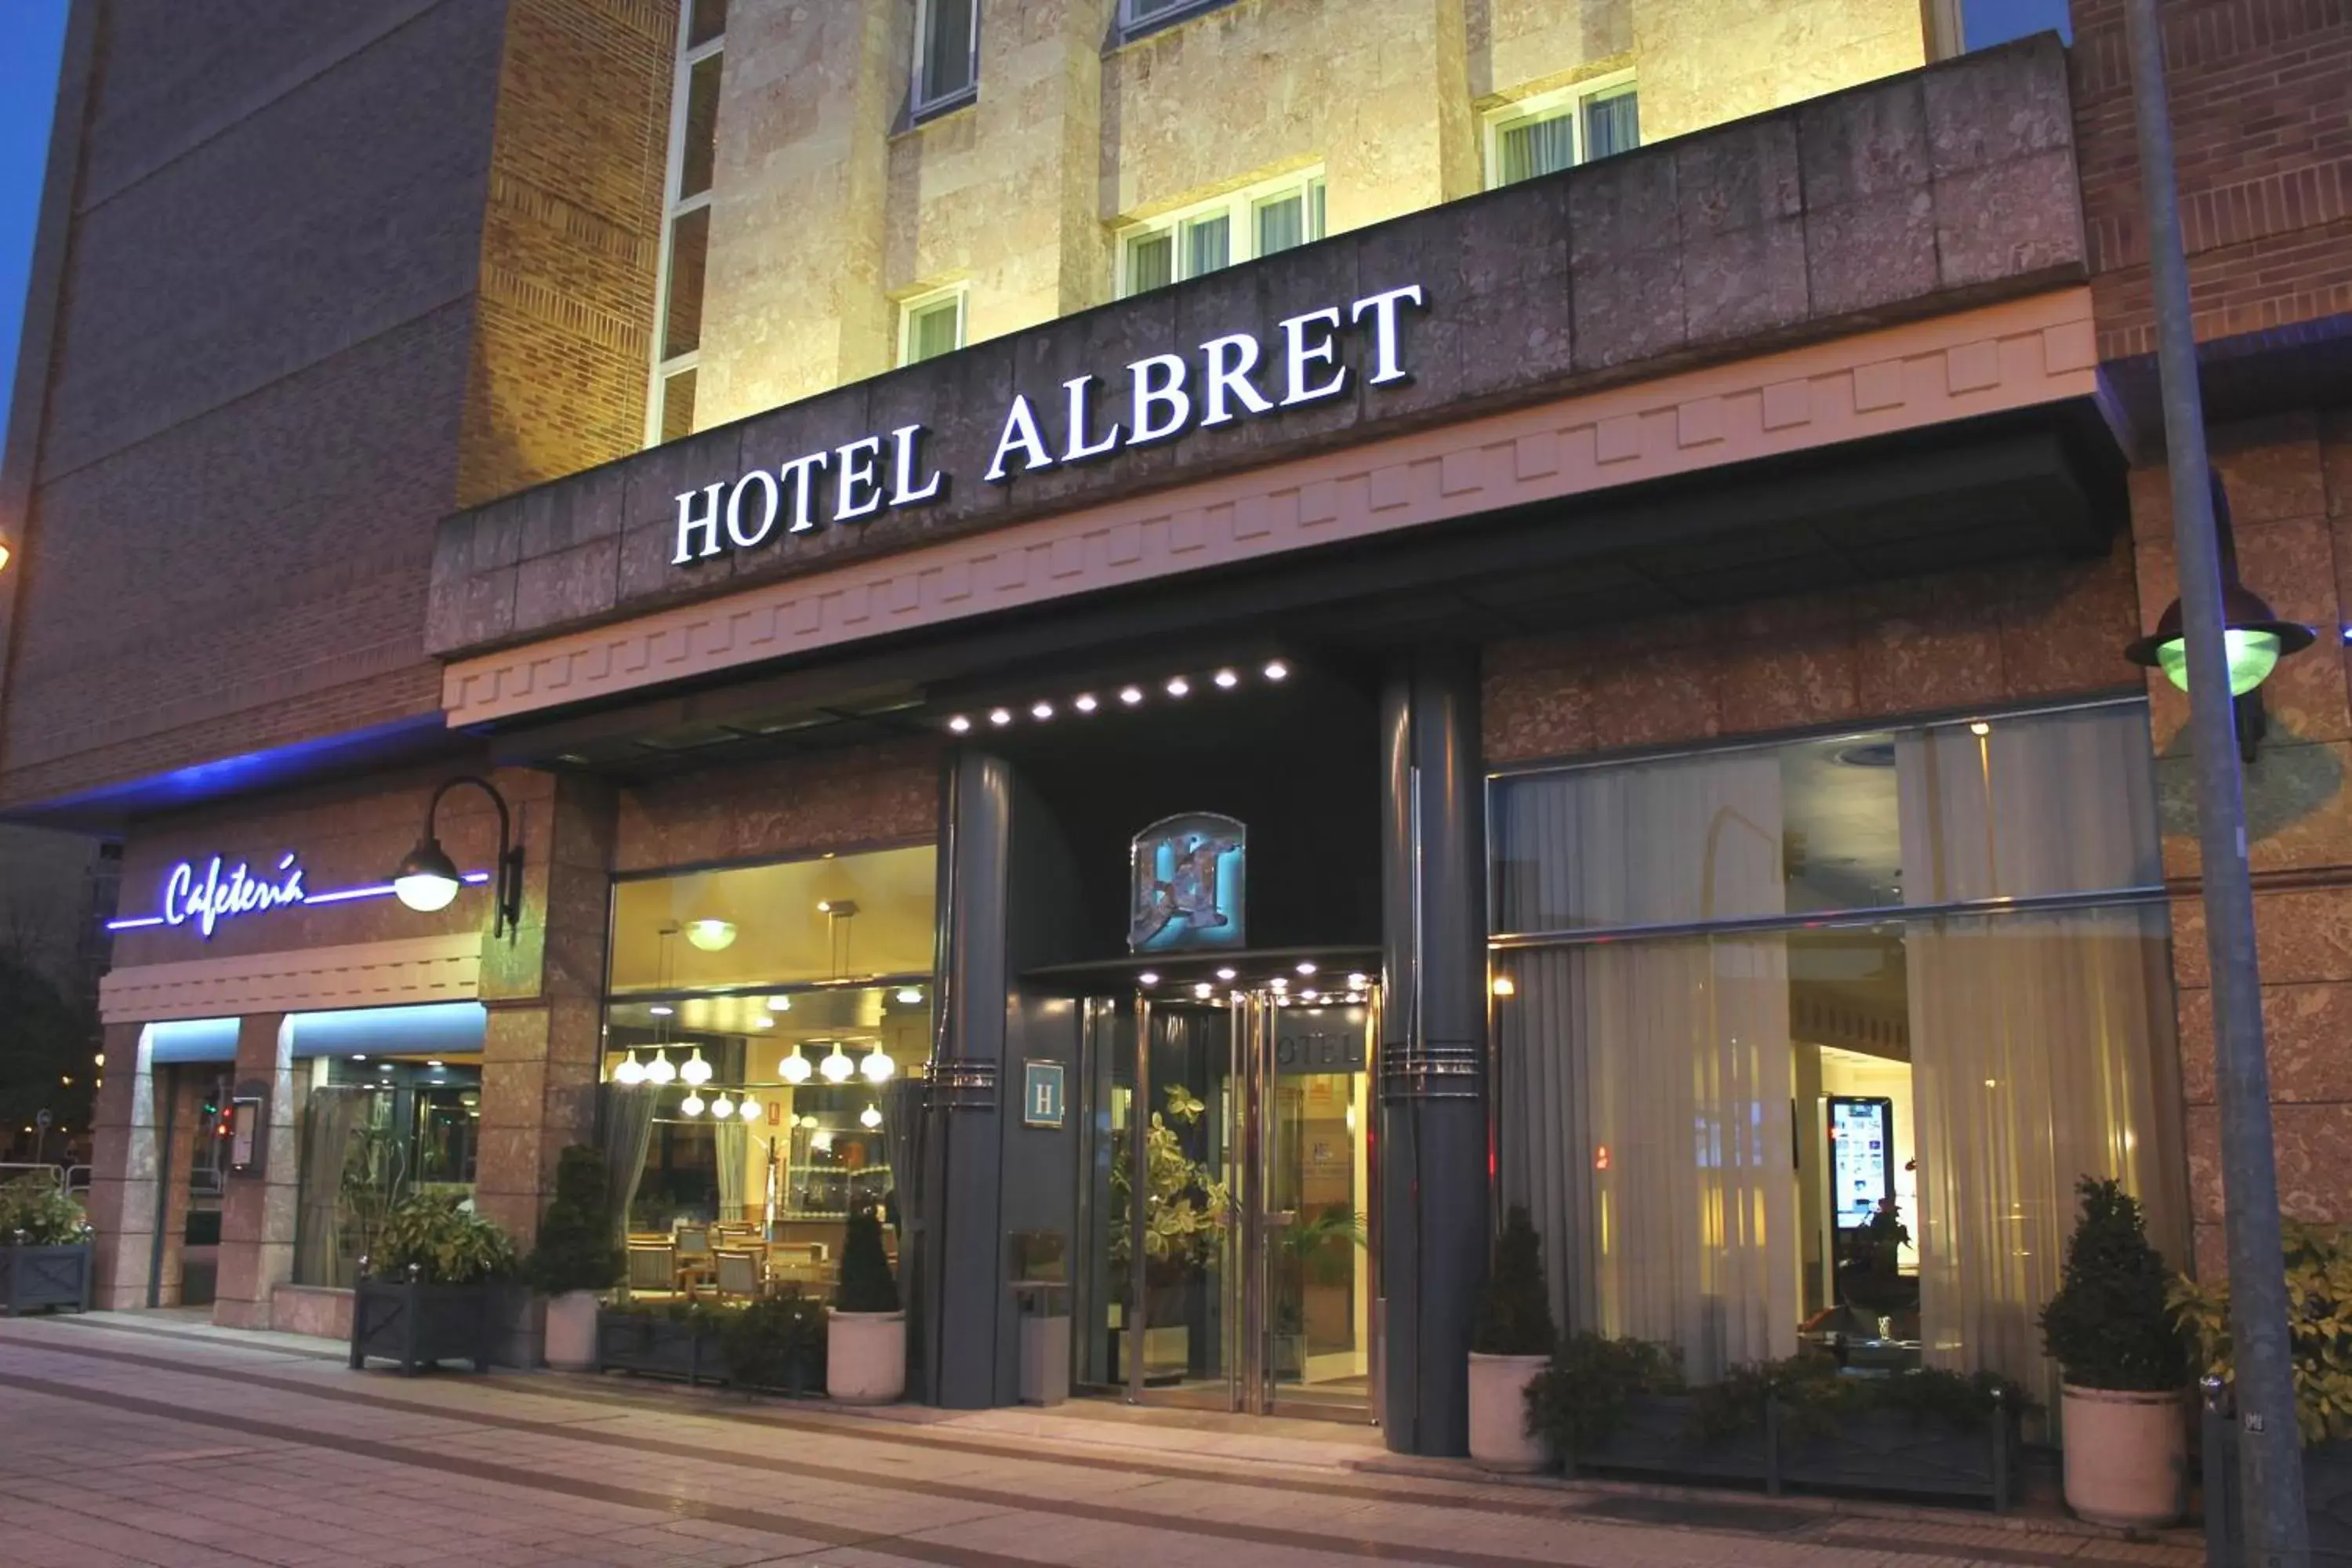 Facade/entrance in Hotel Albret